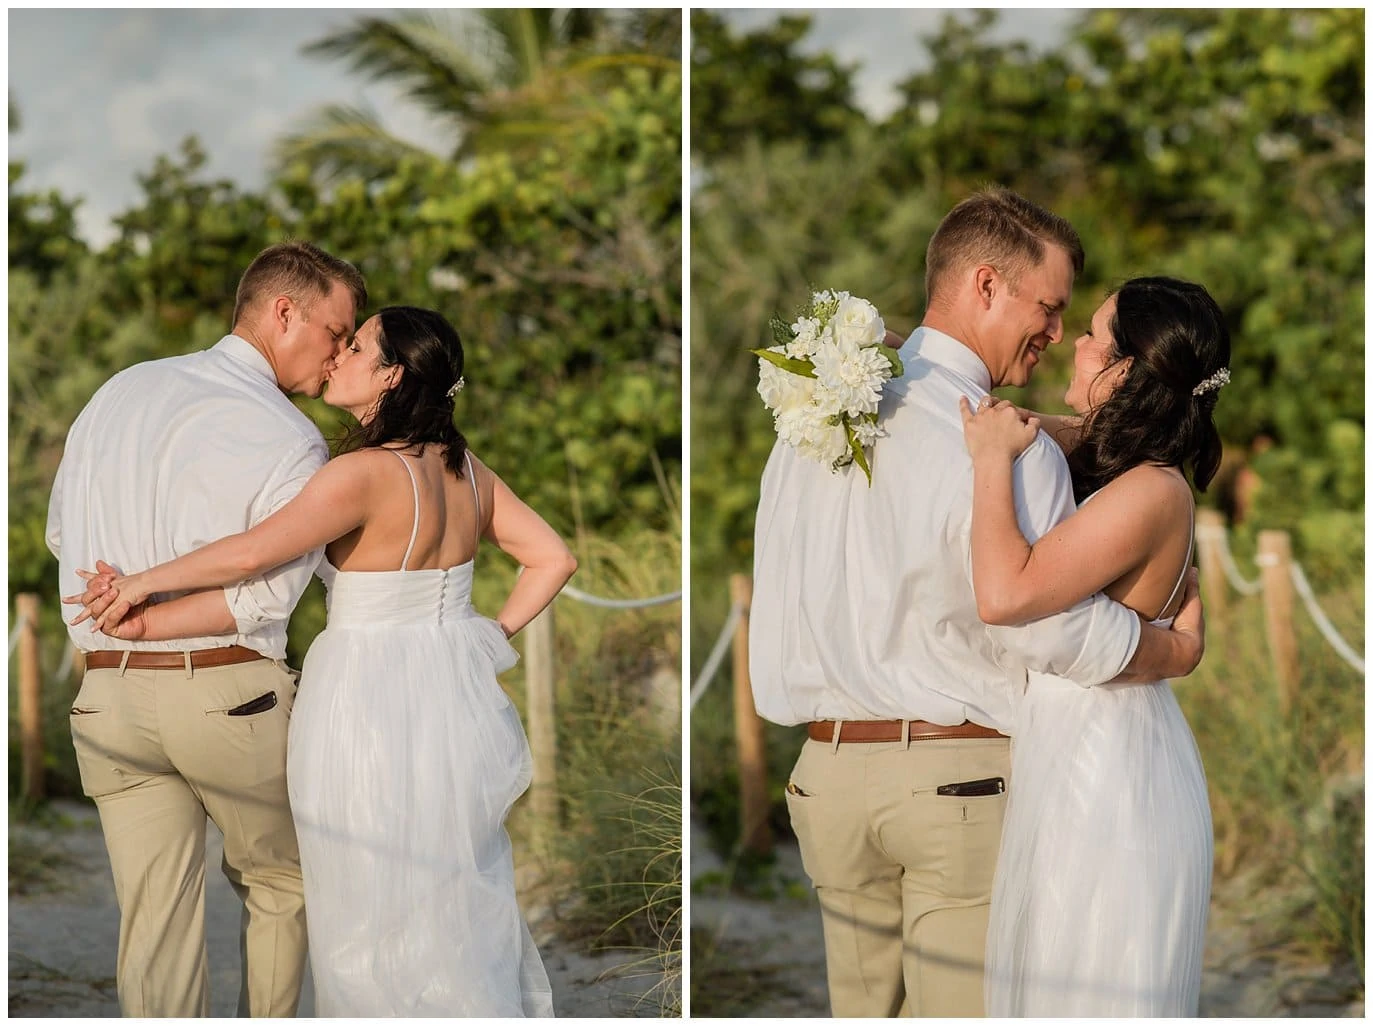 just married! florida beach photo